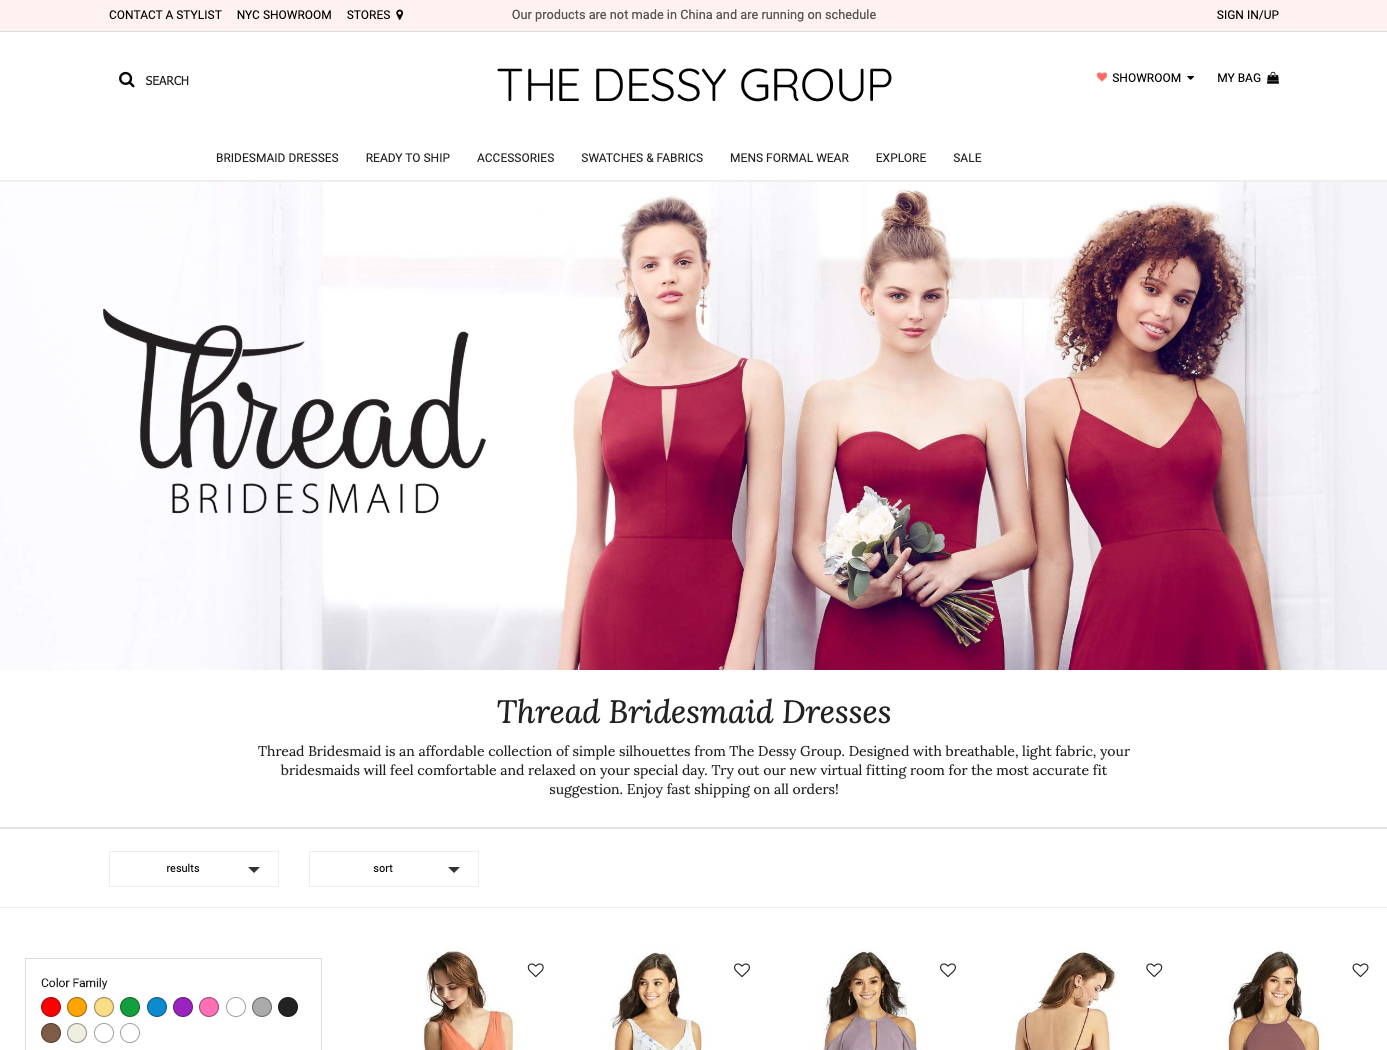 Thread Bridesmaid Dresses